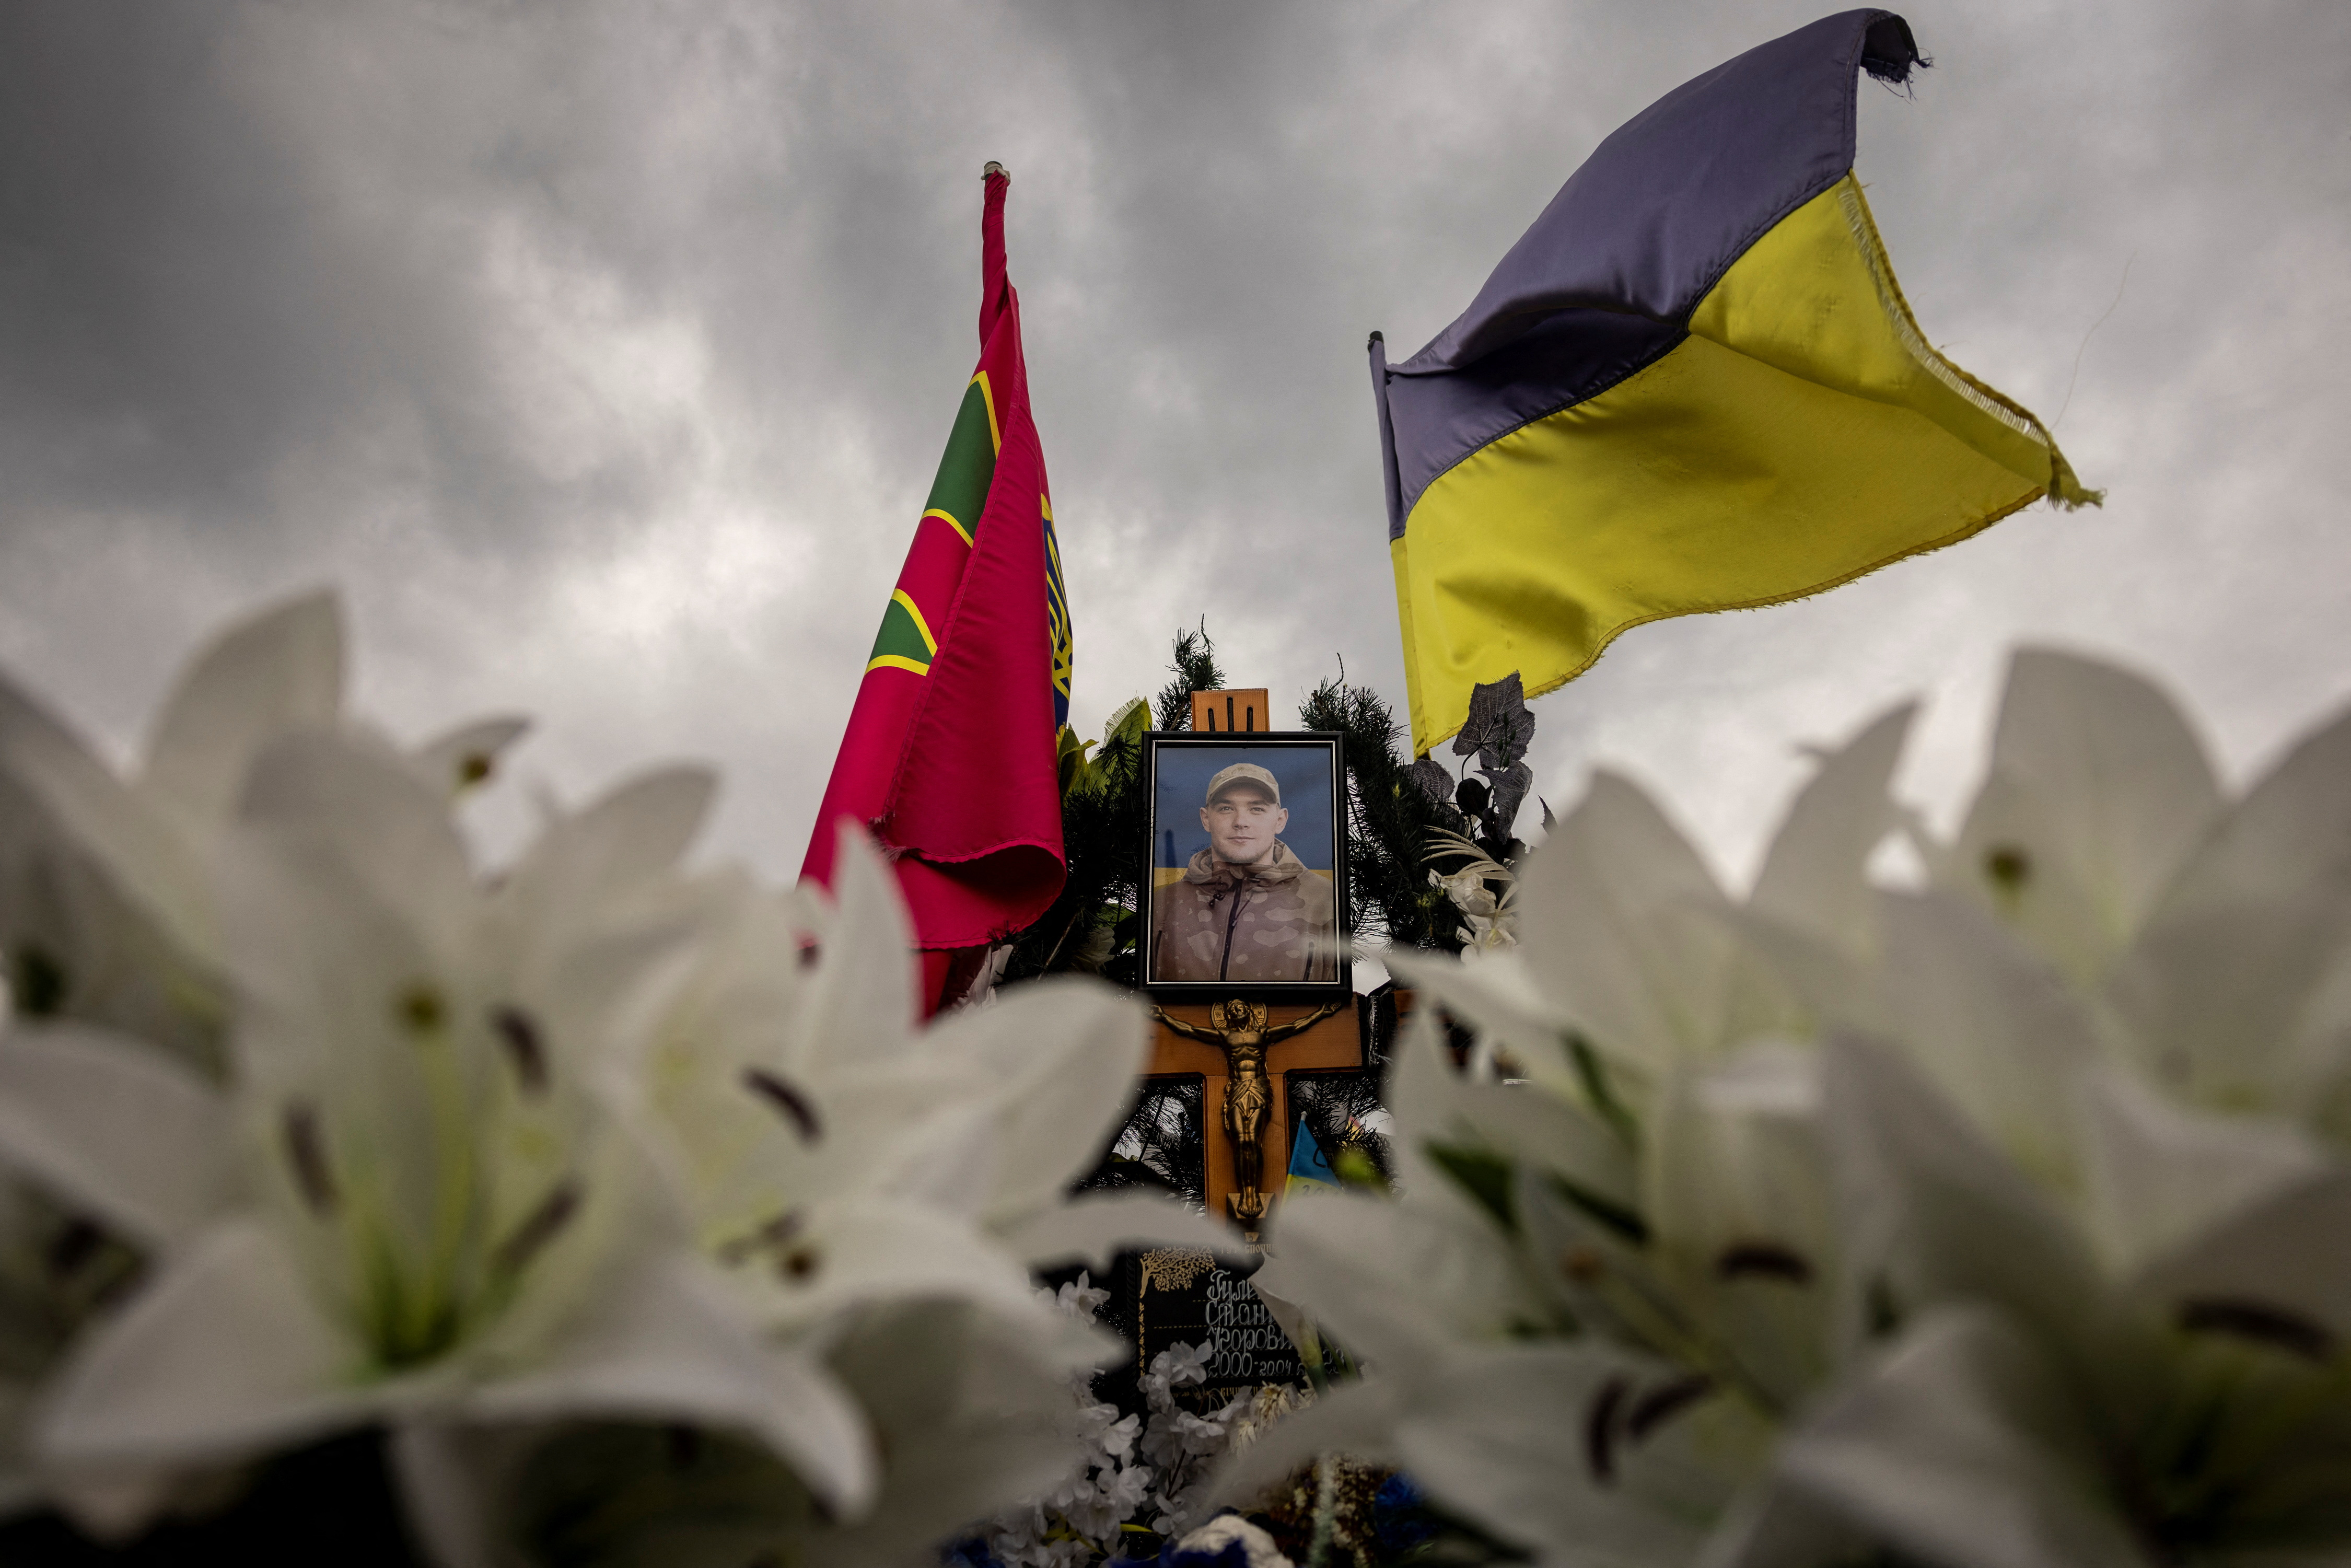 Ukrainian flag flies over the grave of judoka Stanislav Hulenkov, who was killed fighting against Russia's invasion, in Lutsk